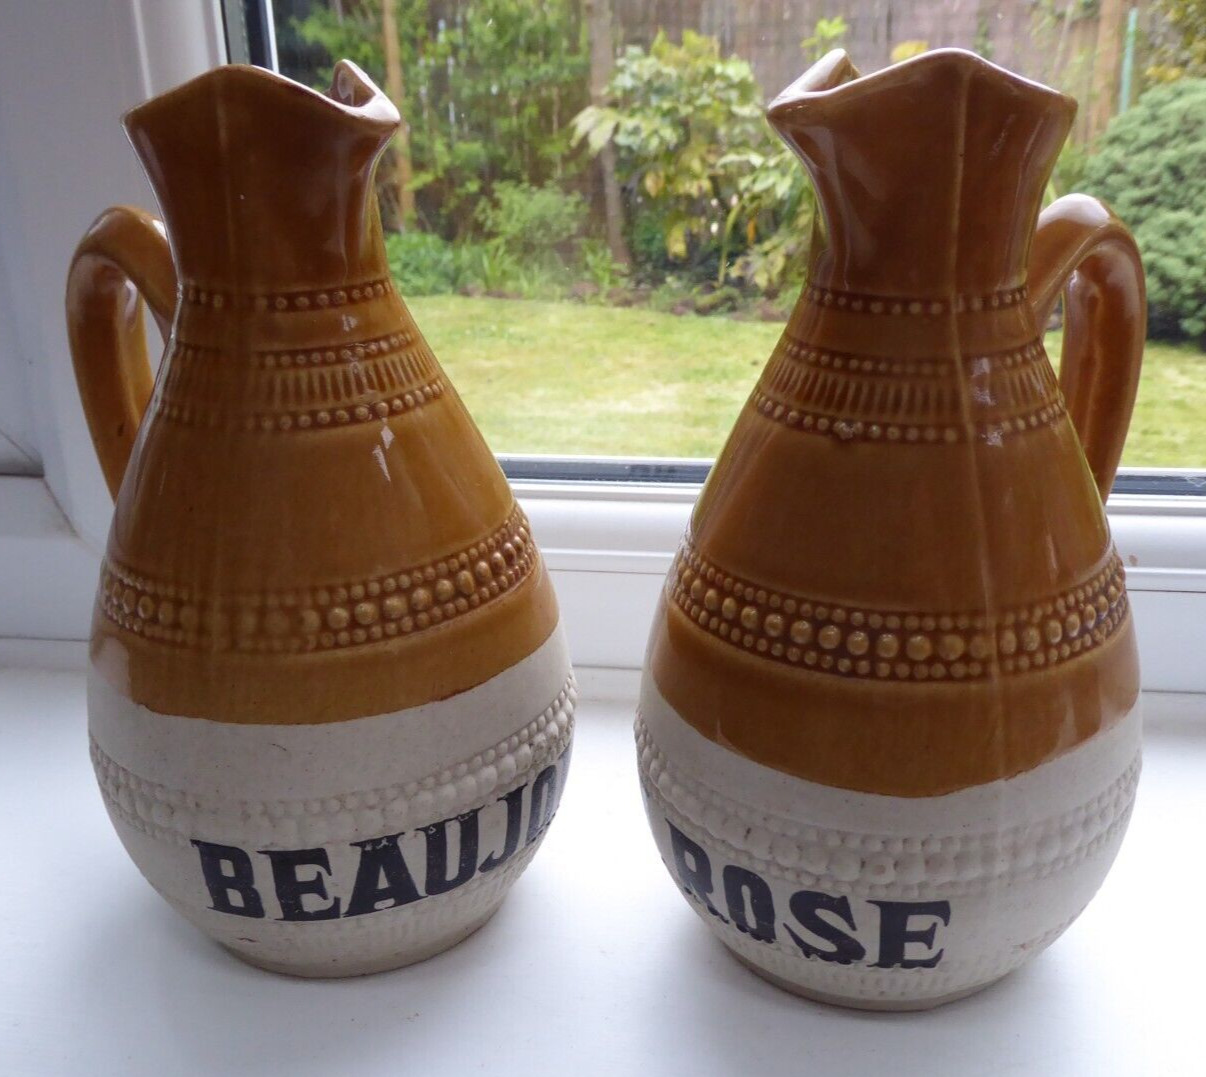 Pair of vintage French LML Limoges wine jugs, stoneware Beaujolais & Vin Rose